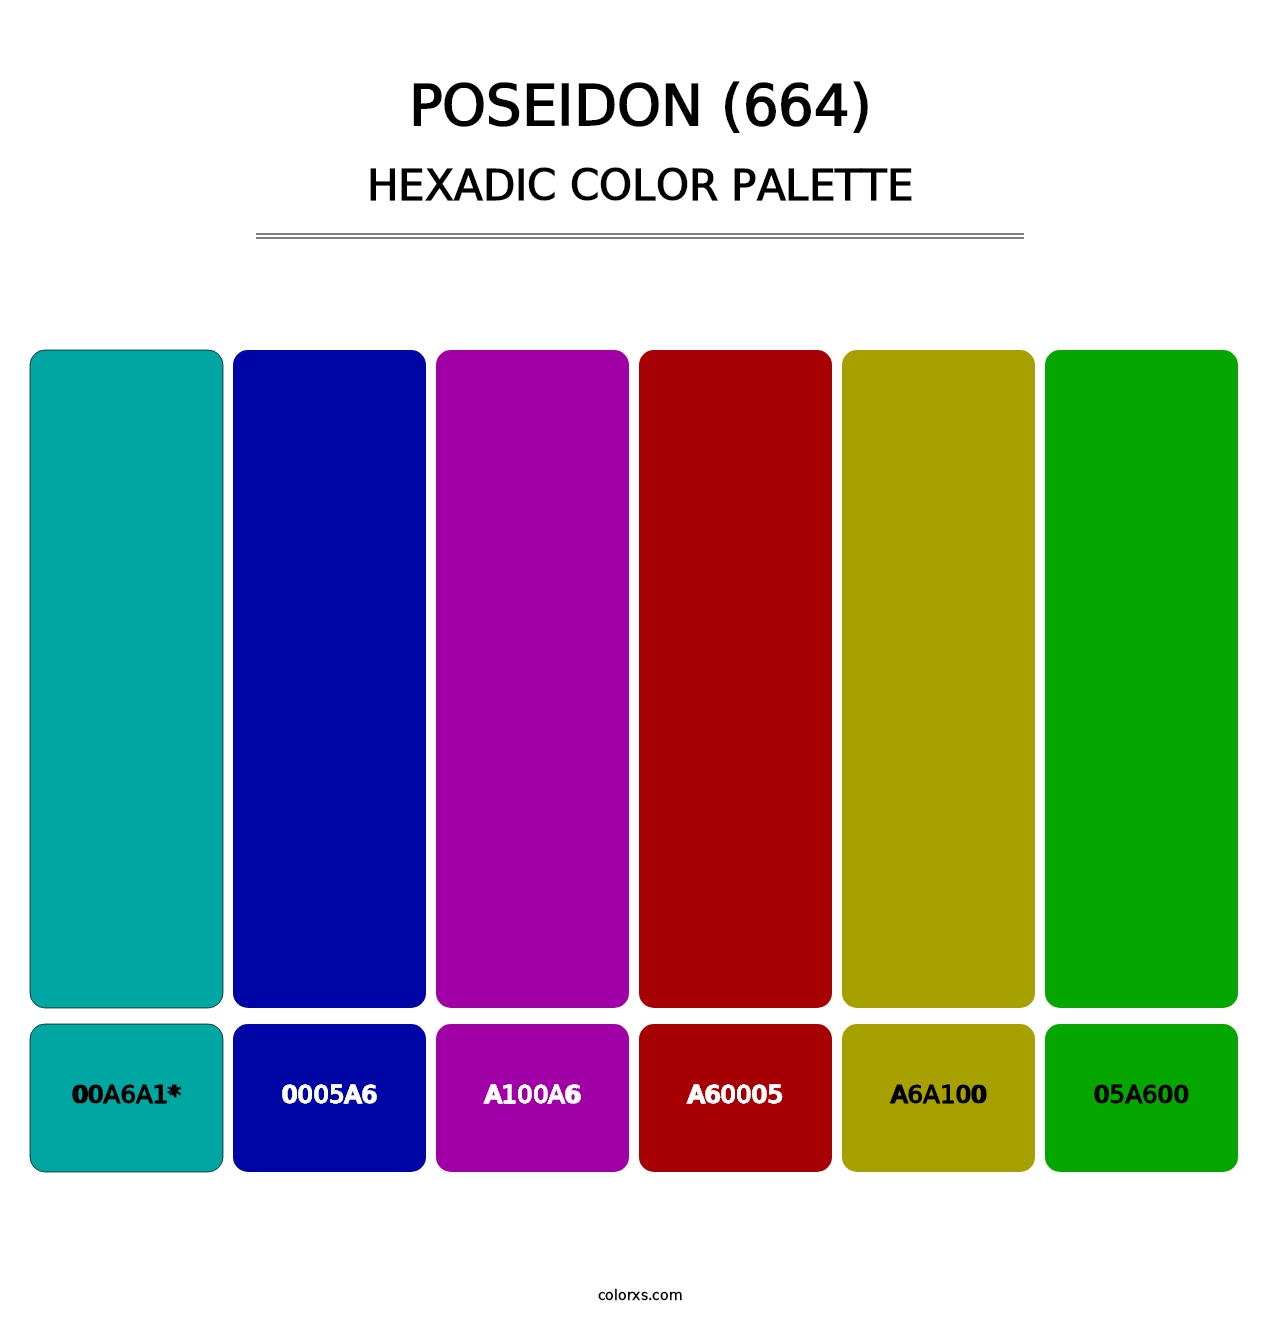 Poseidon (664) - Hexadic Color Palette